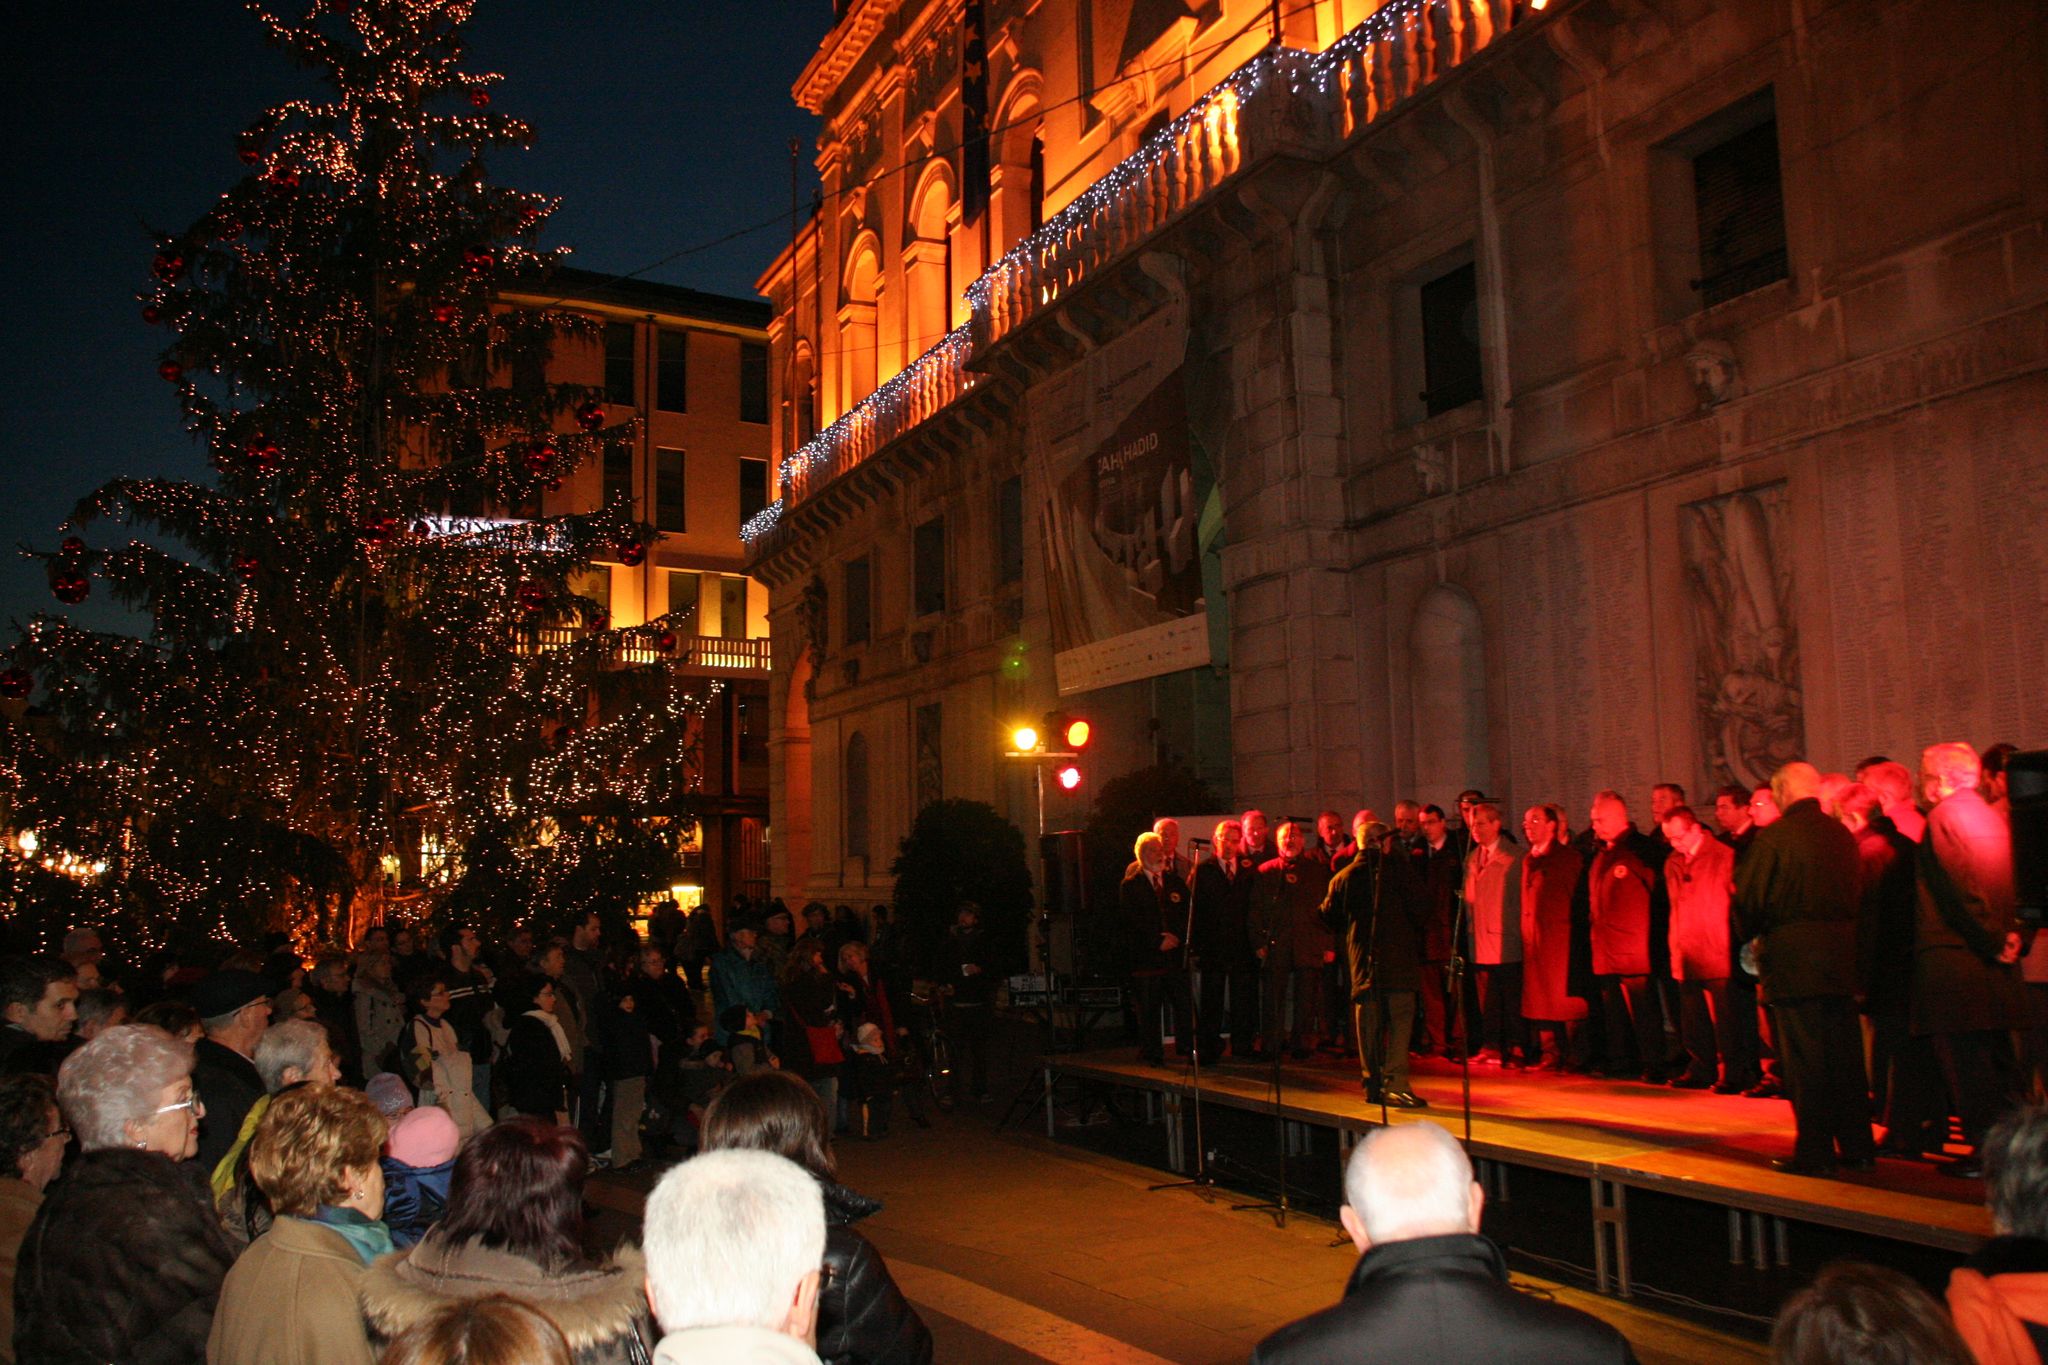 Concerto davanti Palazzo Moroni - Natale 2009 - 05-12-2009 - 073.JPG